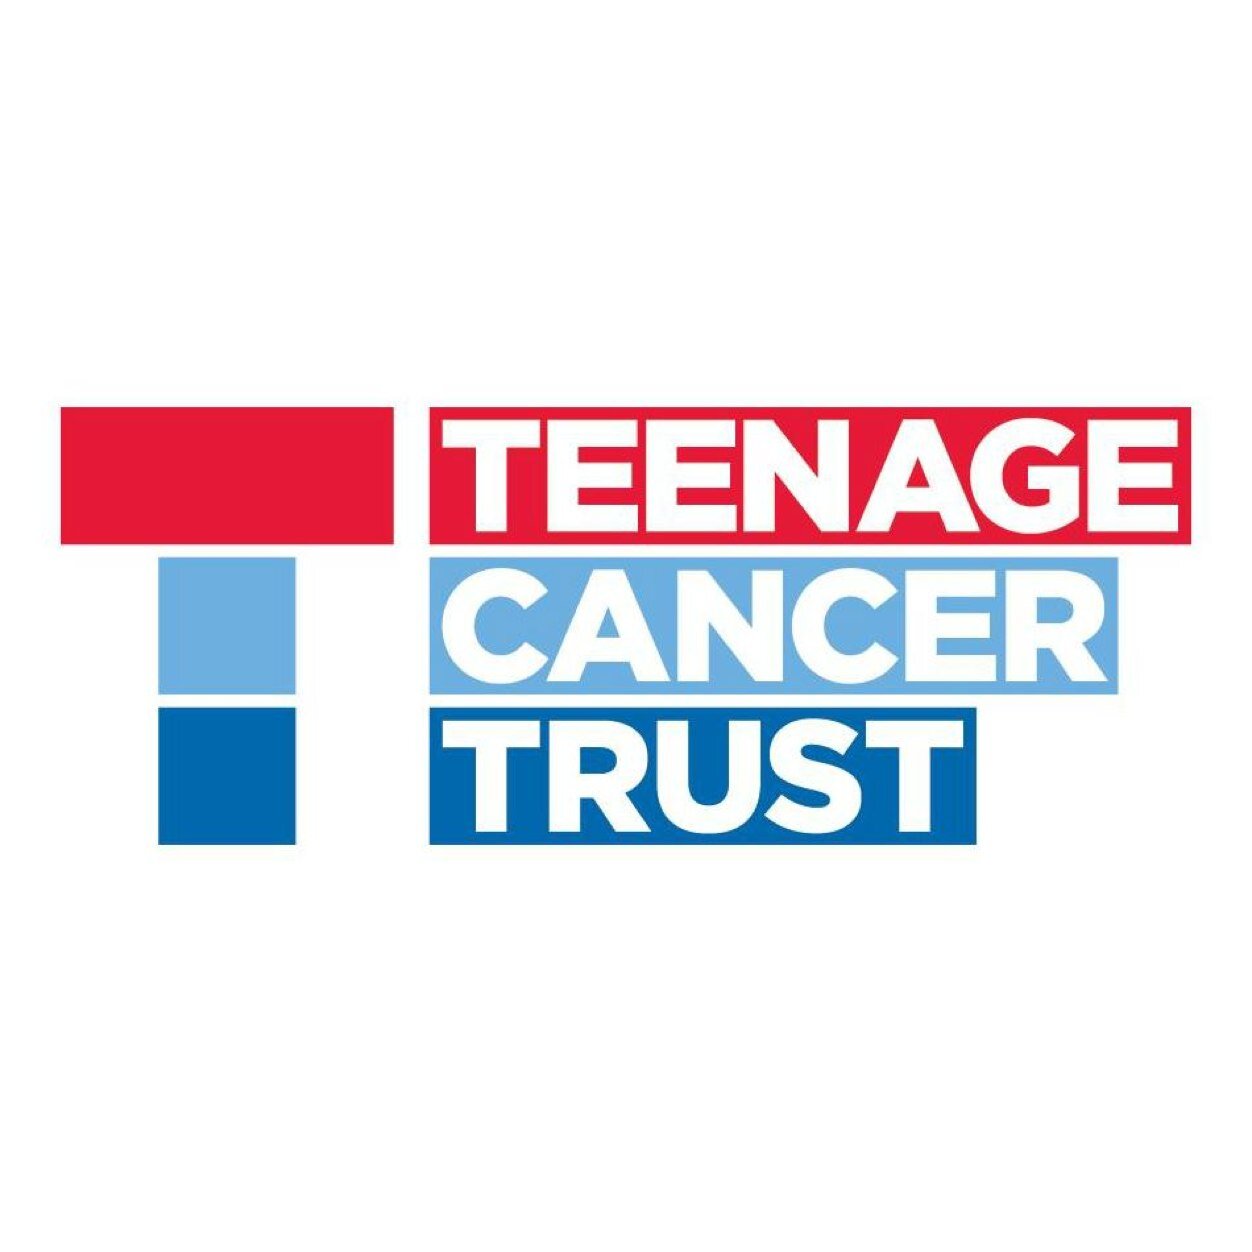 Teenage Cancer Trust Logo photo - 1